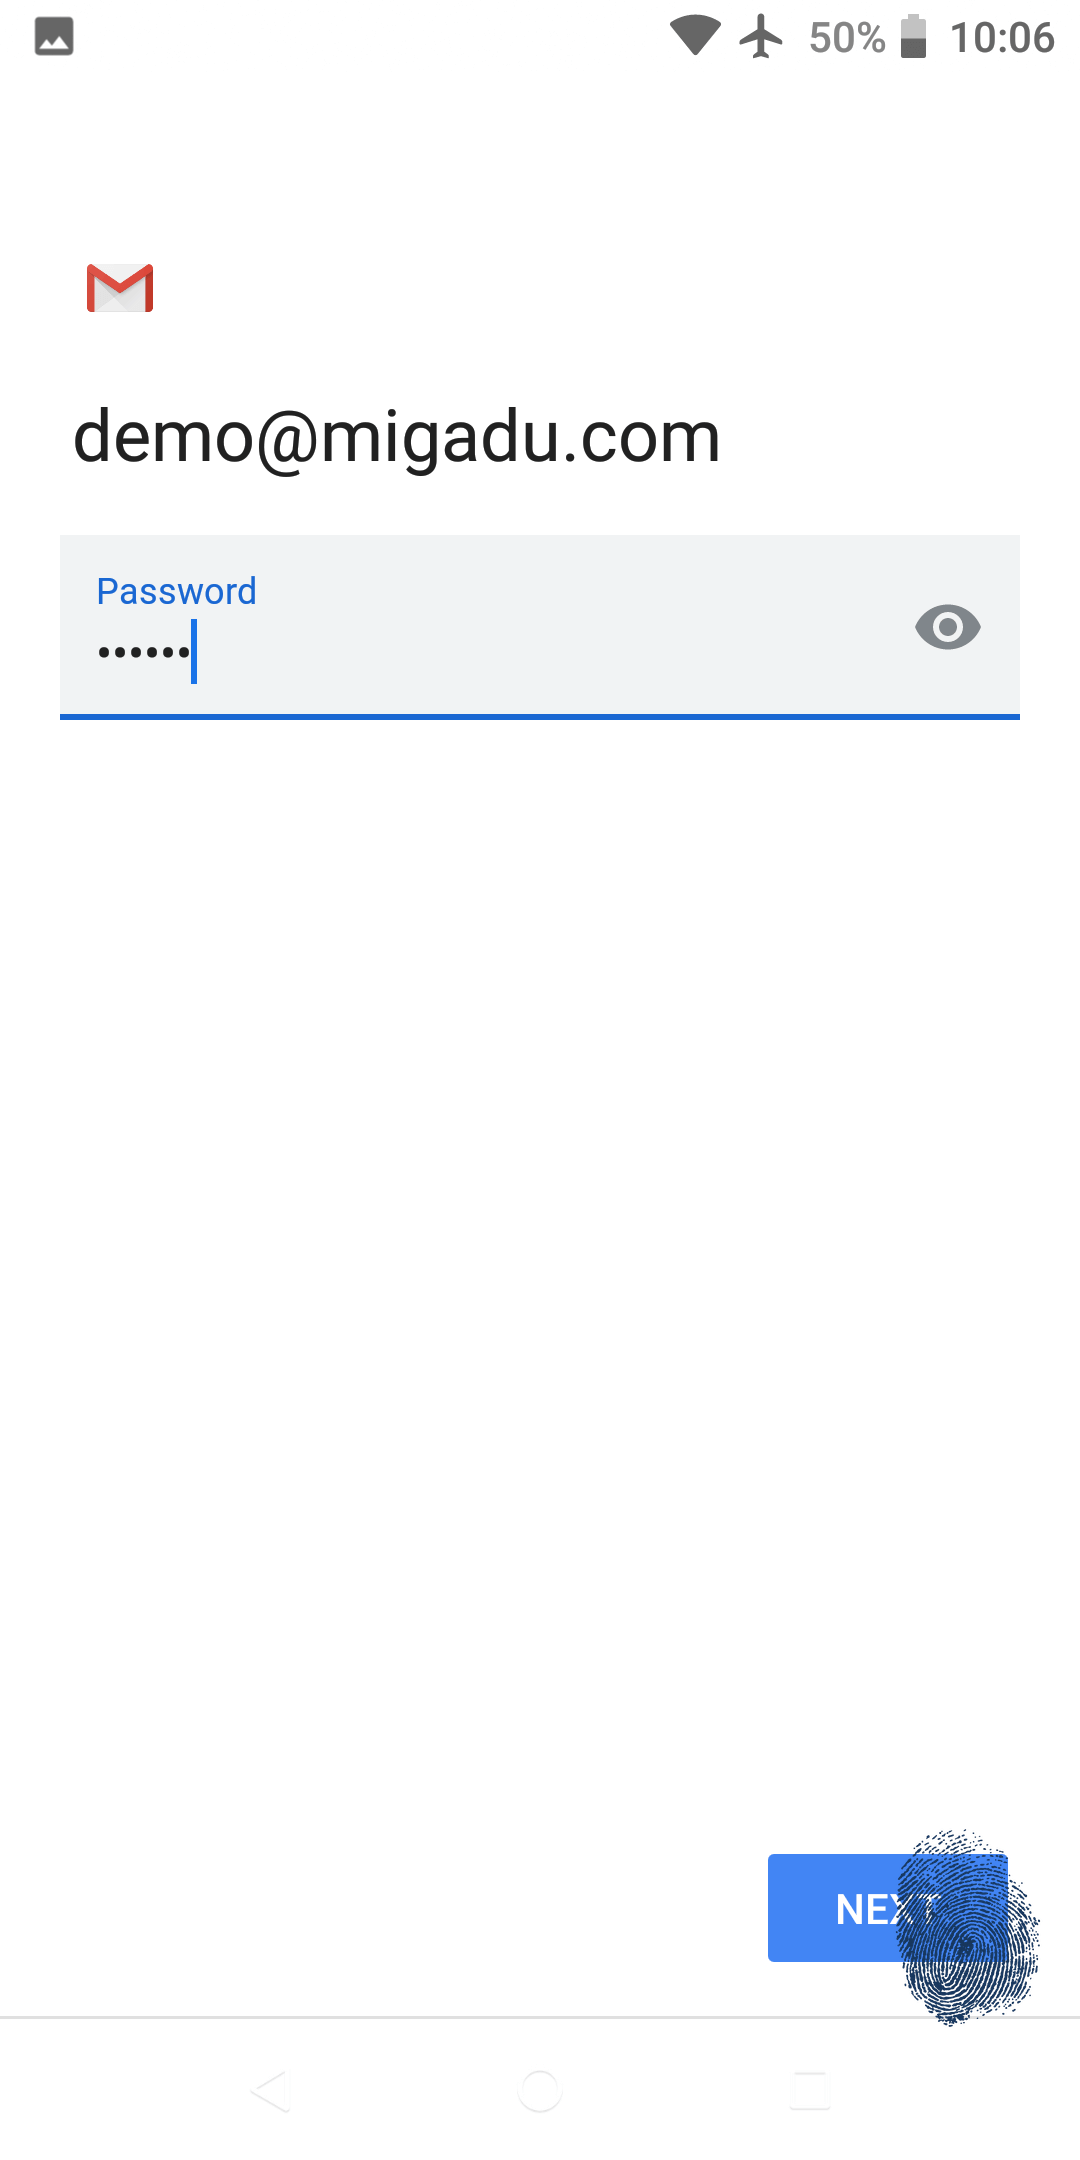 Gmail account password